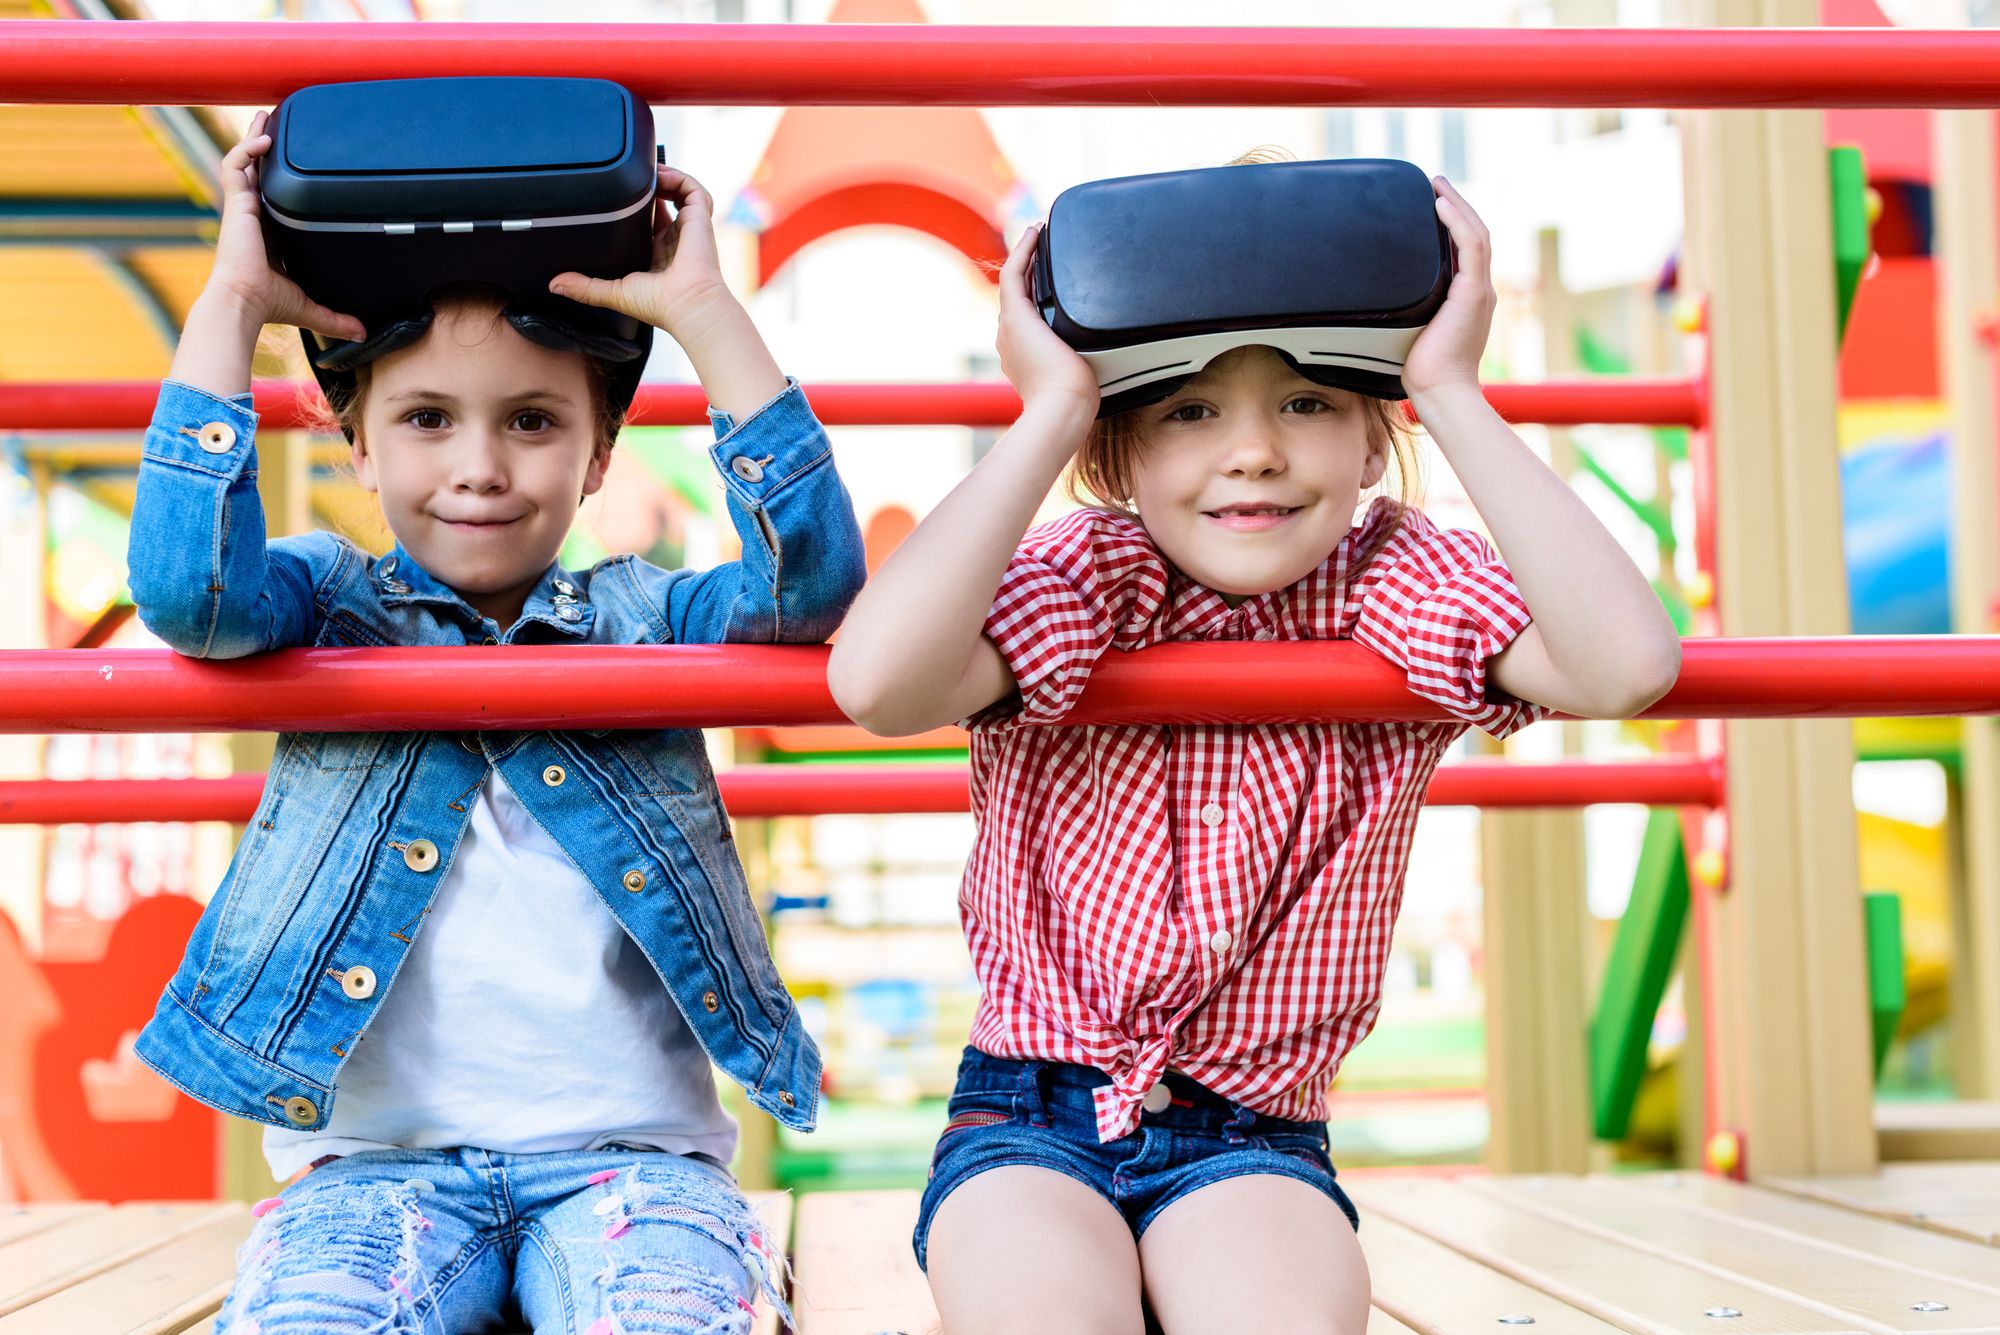 Children in park wearing VR headsets